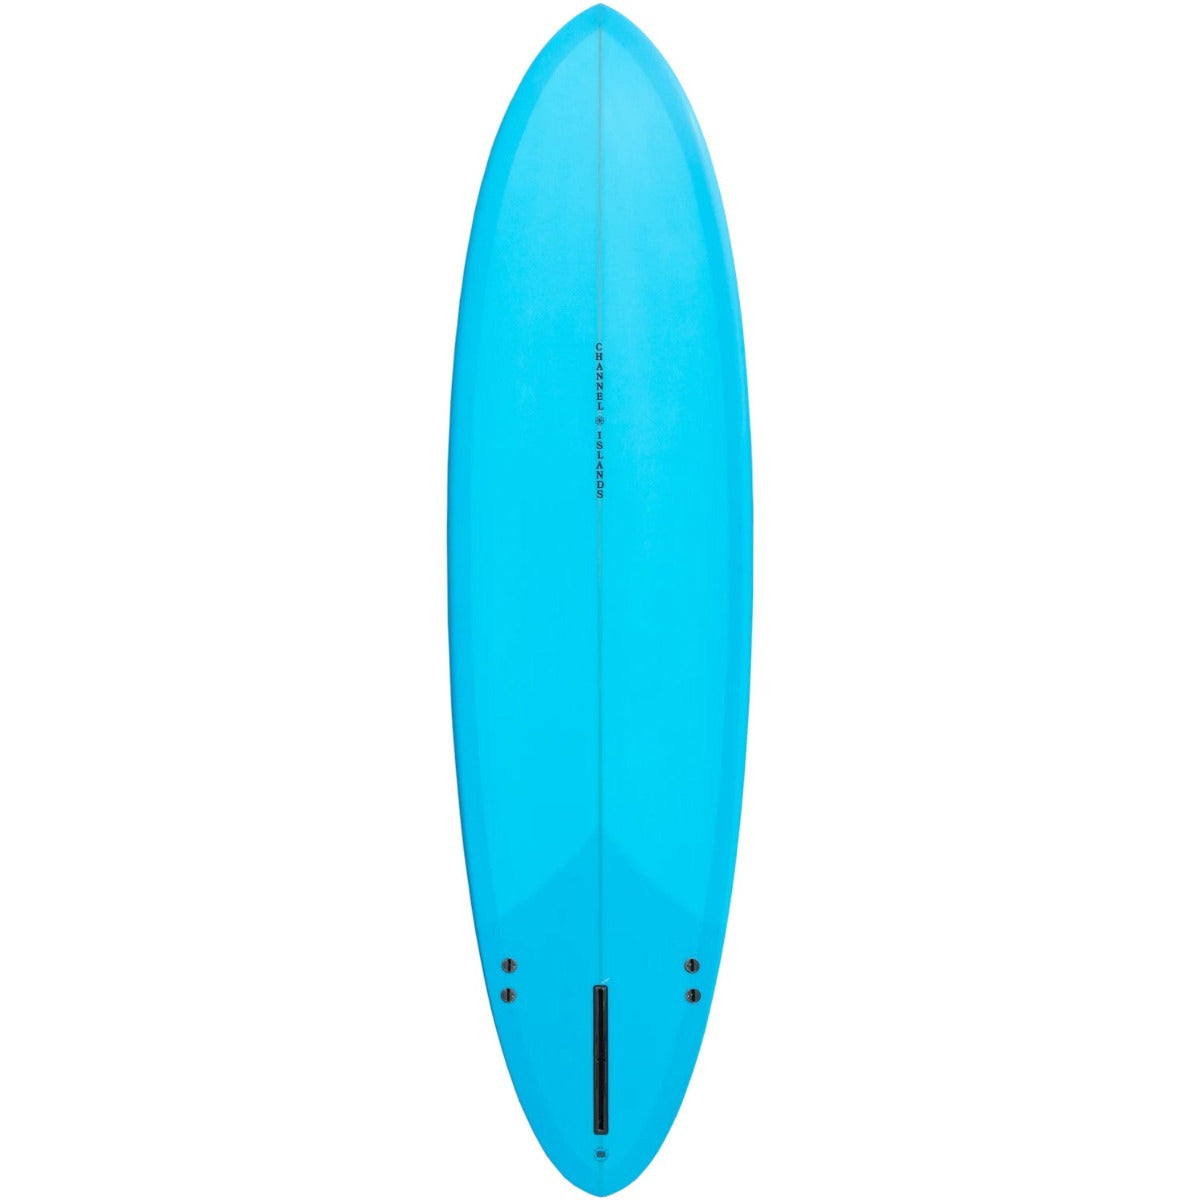 channel-islands-surfboards-midlength-ci-mid-blue-bottom-galway-ireland-blacksheepsurfco